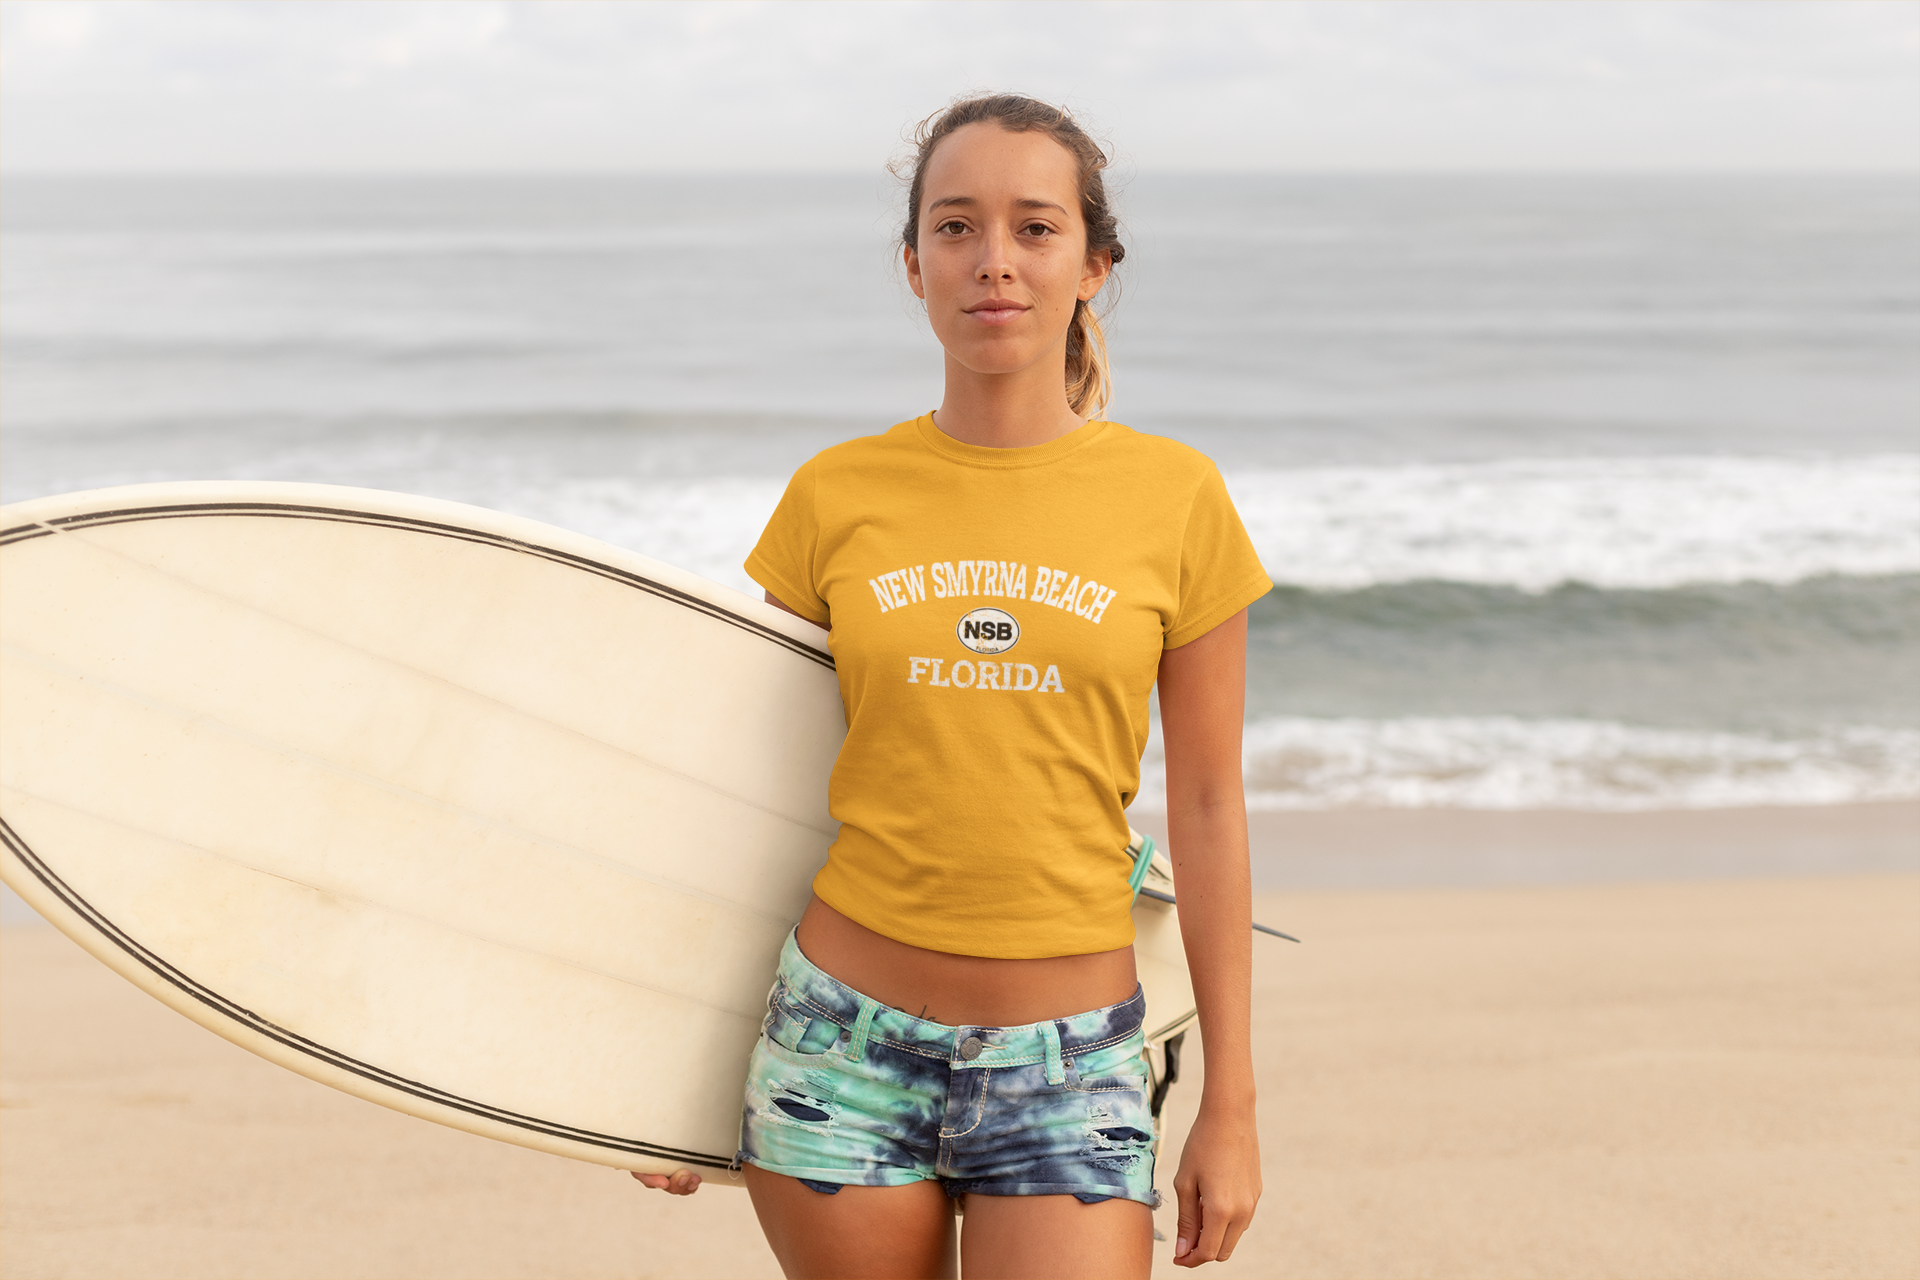 New Smyrna Beach Women's Academic T-Shirt Souvenir - My Destination Location